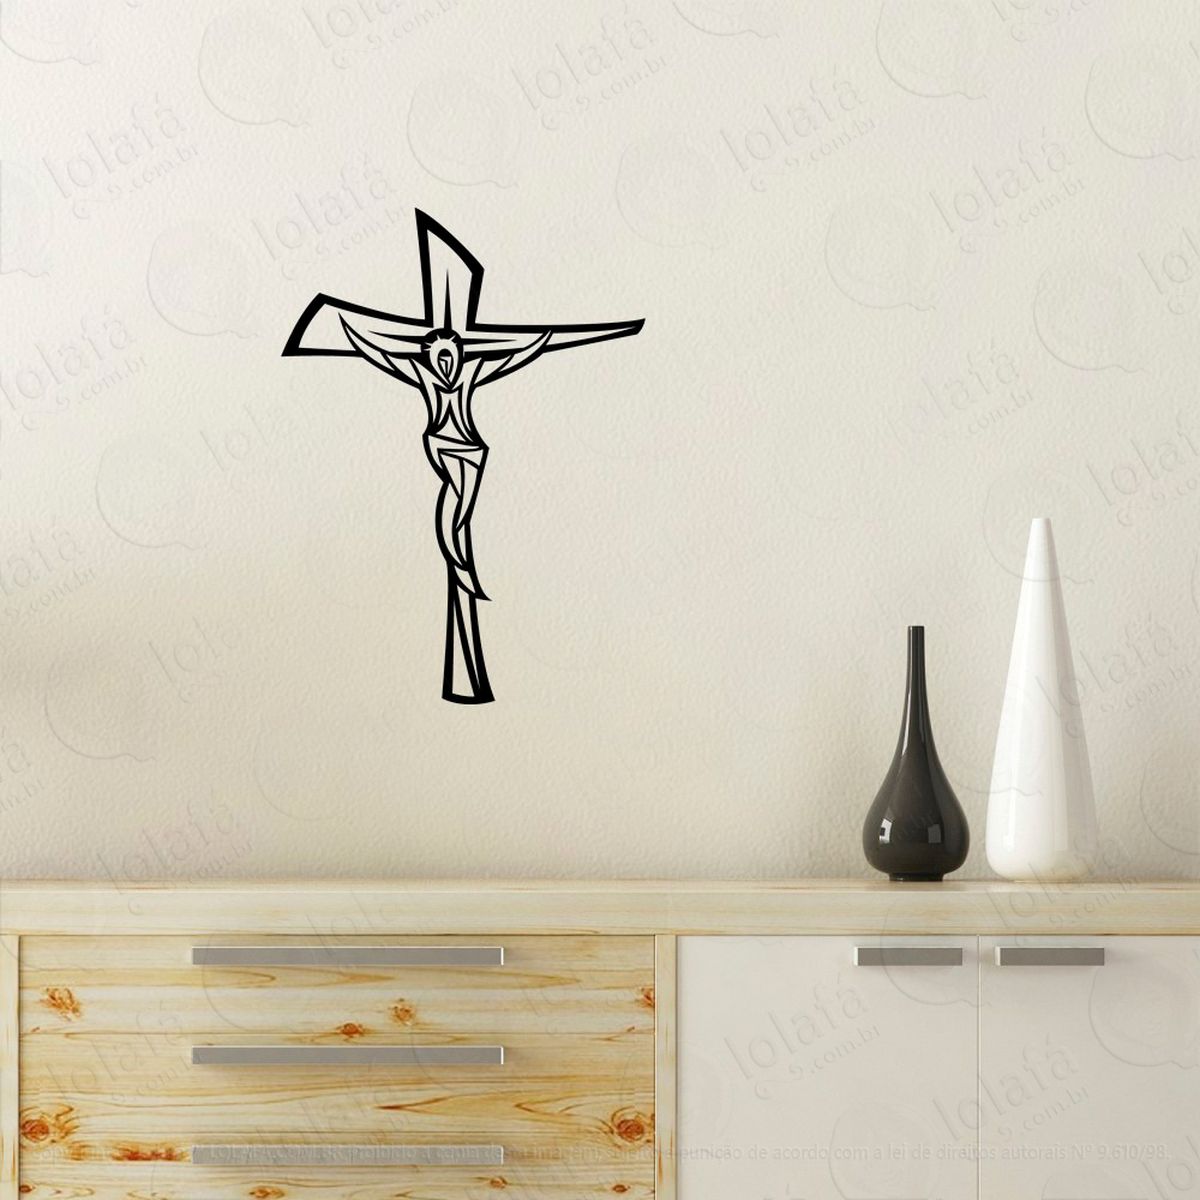 jesus cristo adesivo de parede decorativo para casa, quarto, sala e vidro - mod:59